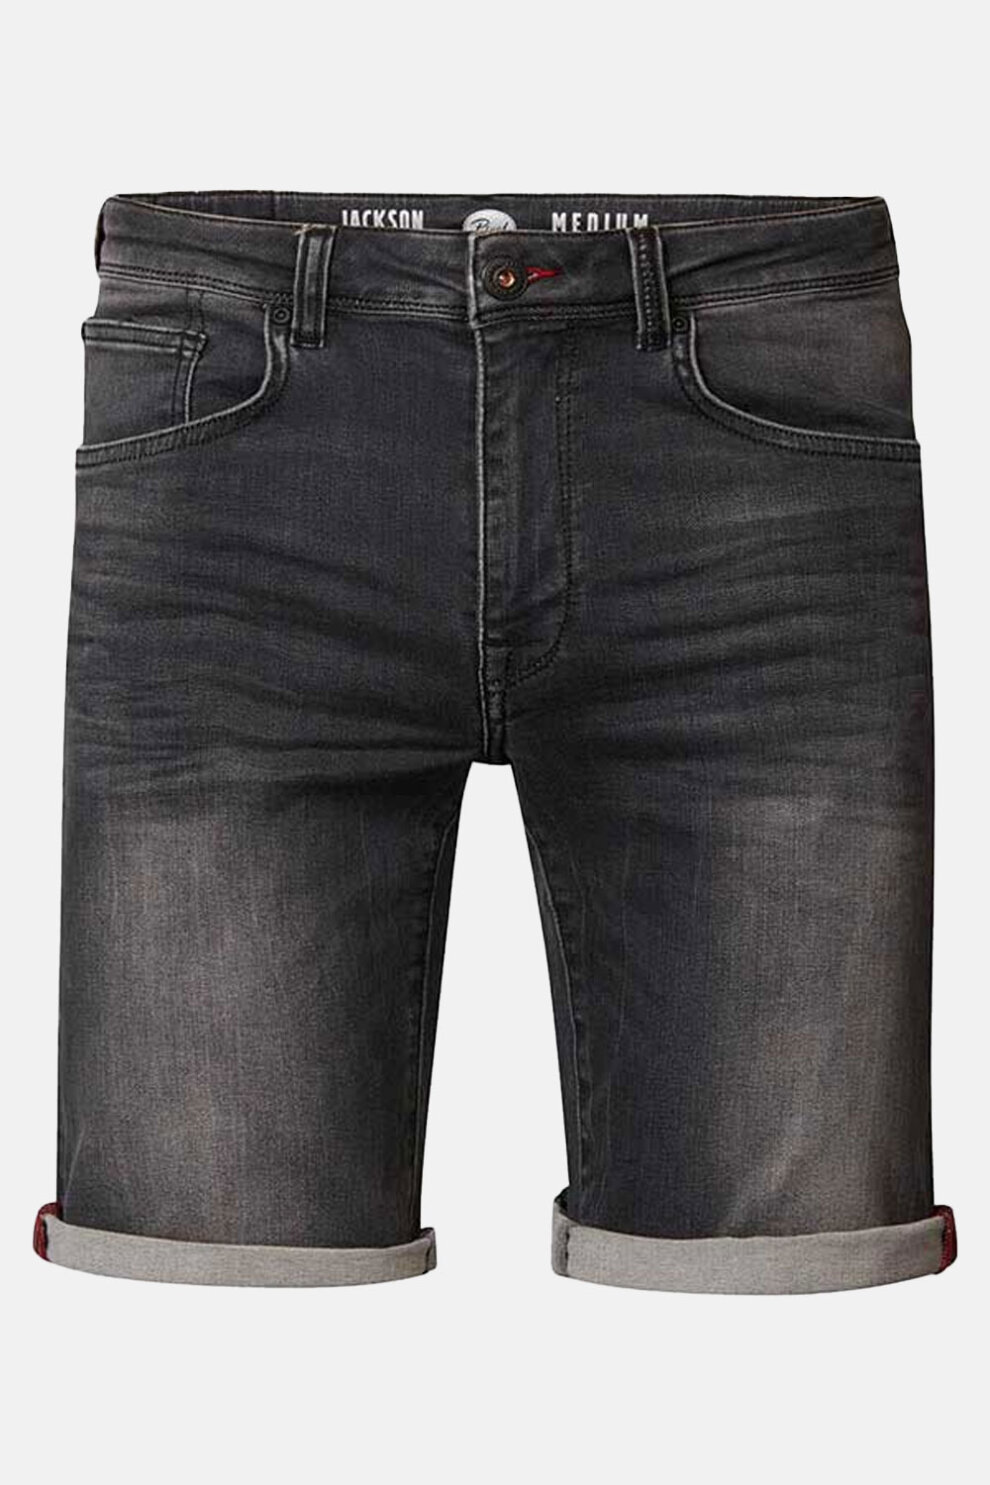 MUŠKARCI - Kratke hlače - Petrol jeans bermude - Siva